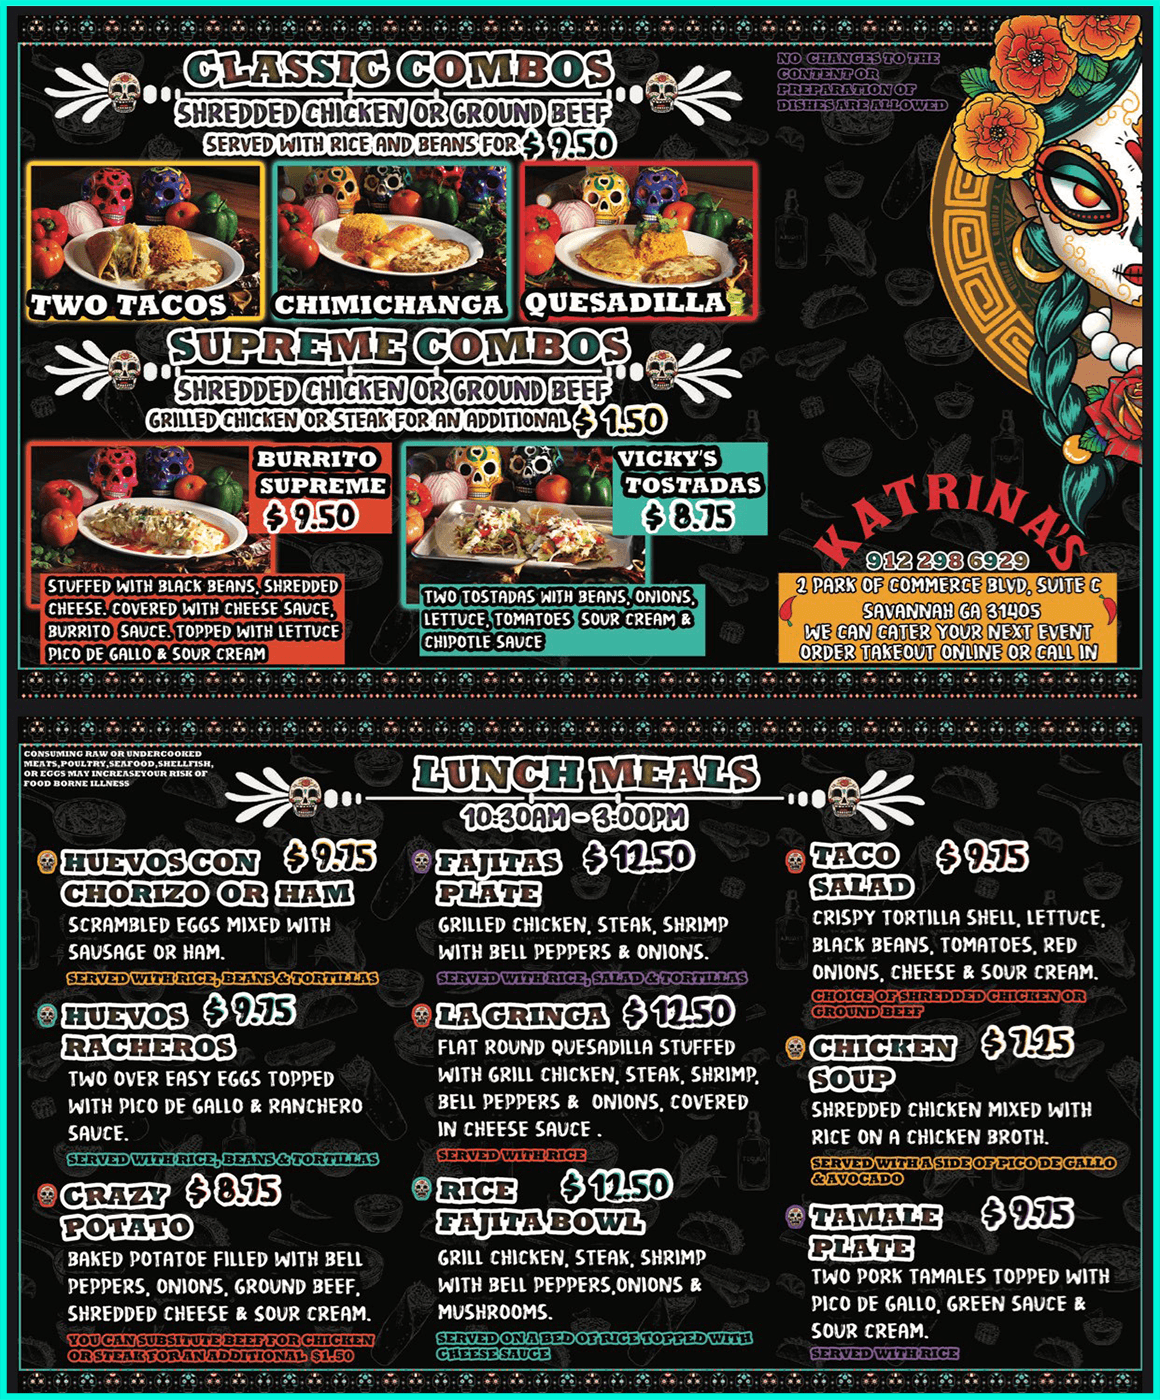 Chimichanga - Menu - El Patron Mexican restaurant & Entertainment